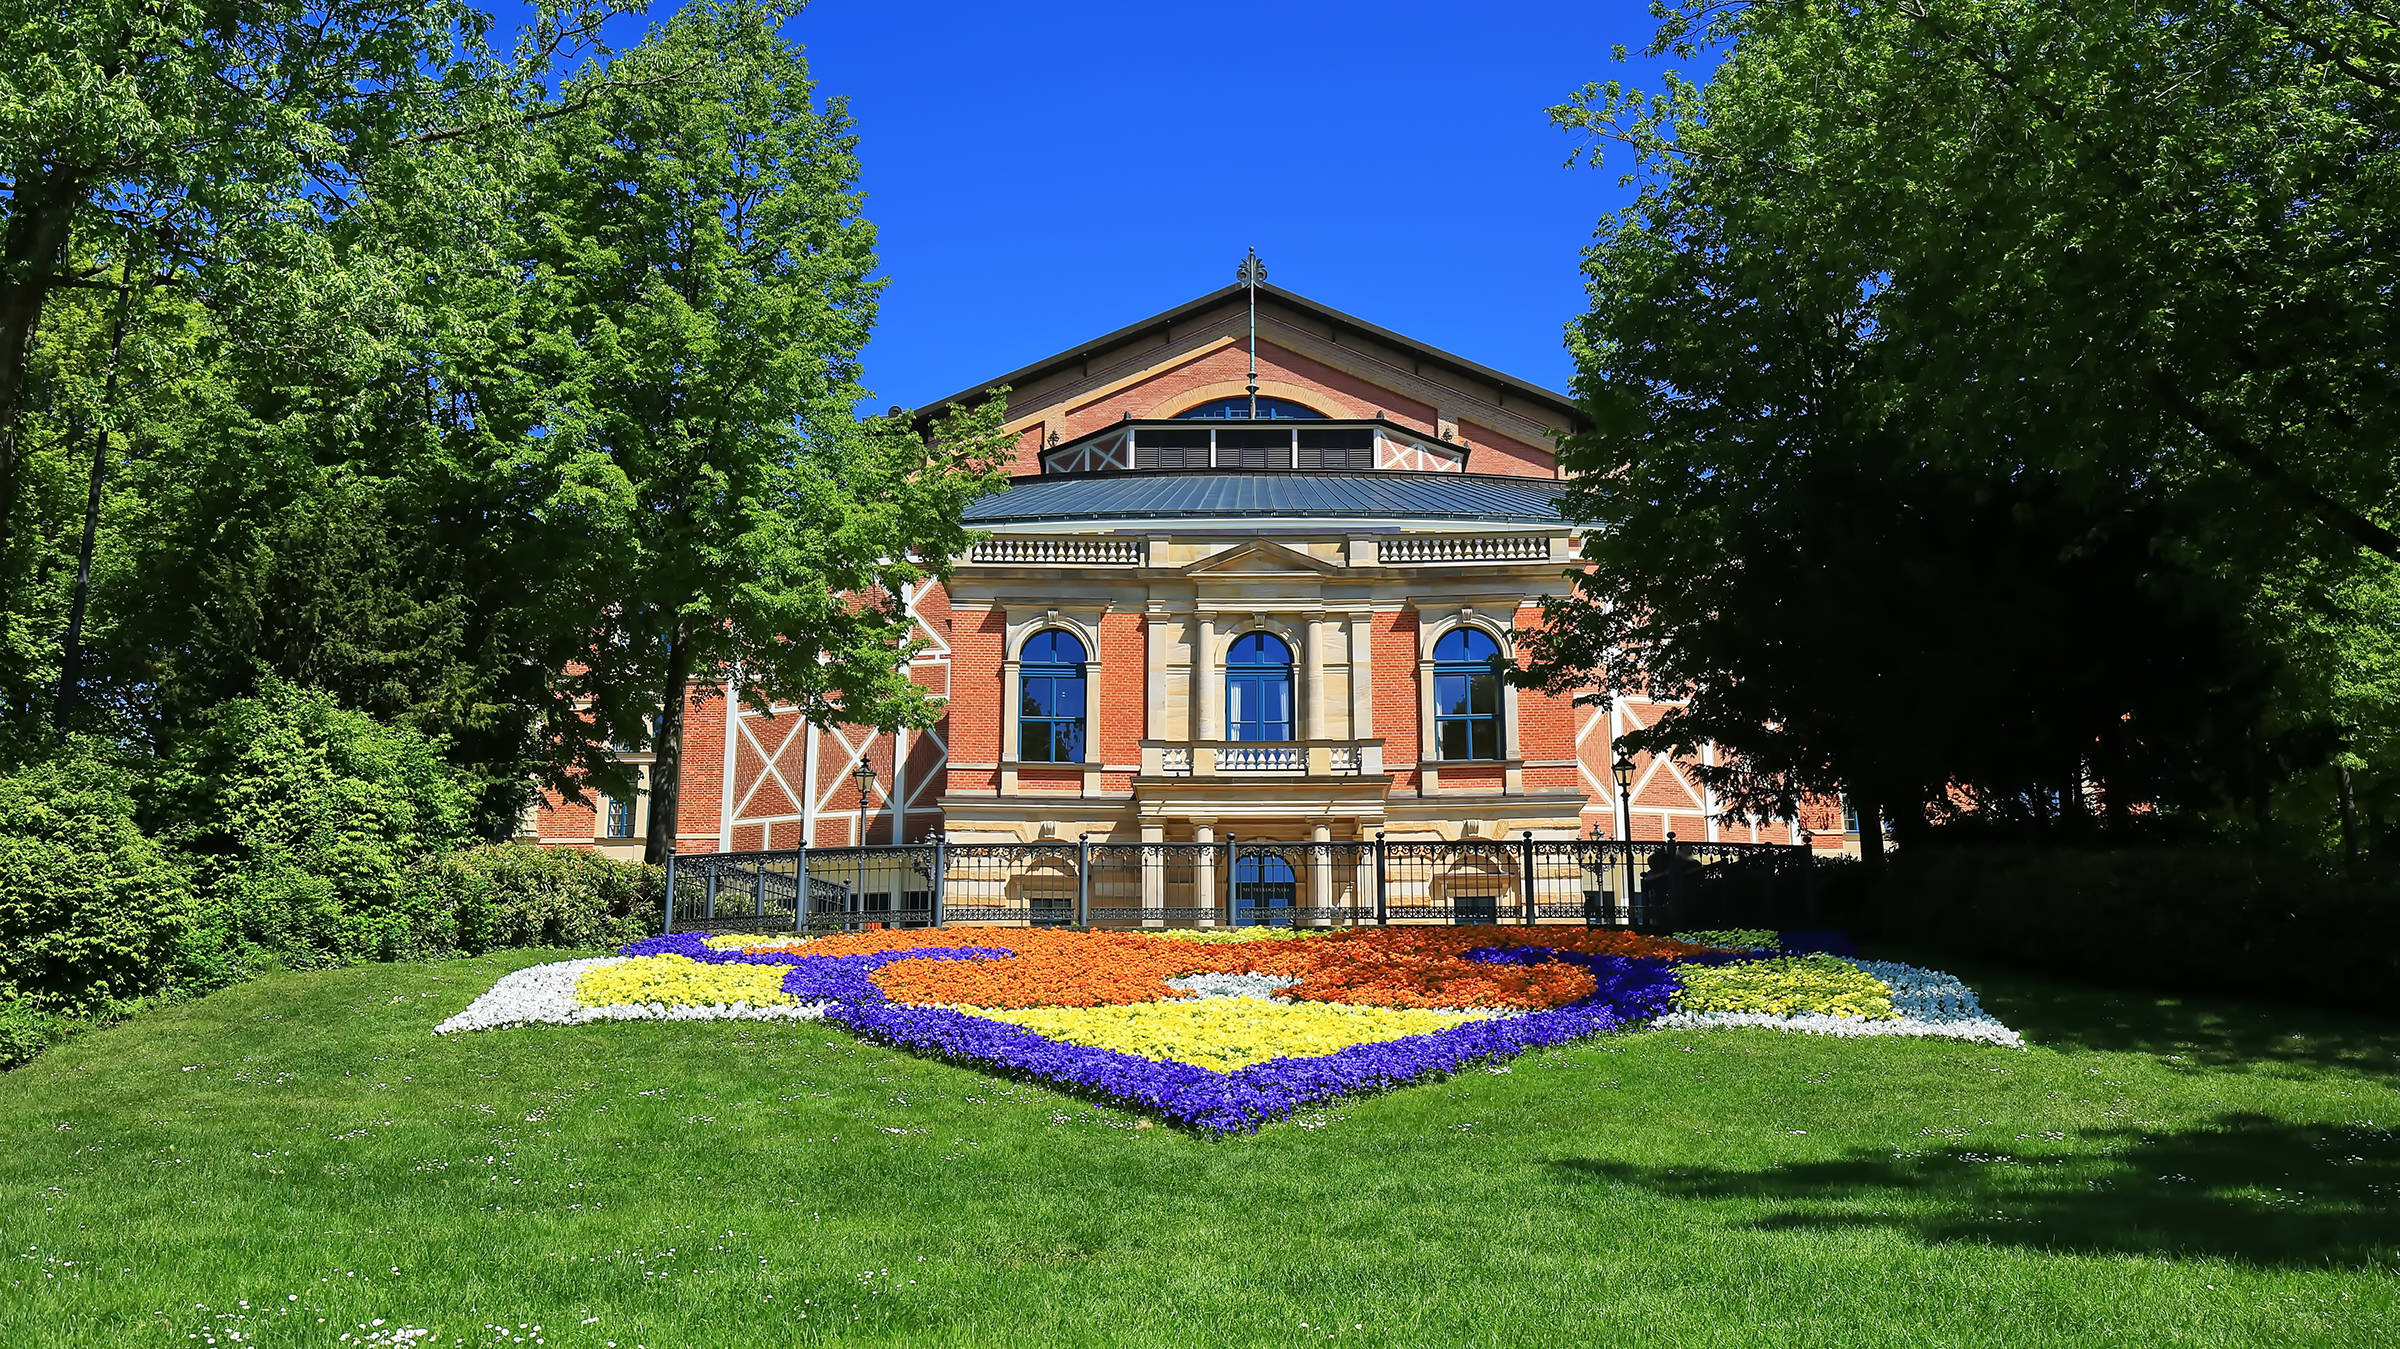 Teatro dell'Opera di Bayreuth - H4 Hotel Residenzschloss Bayreuth - Sito web ufficiale